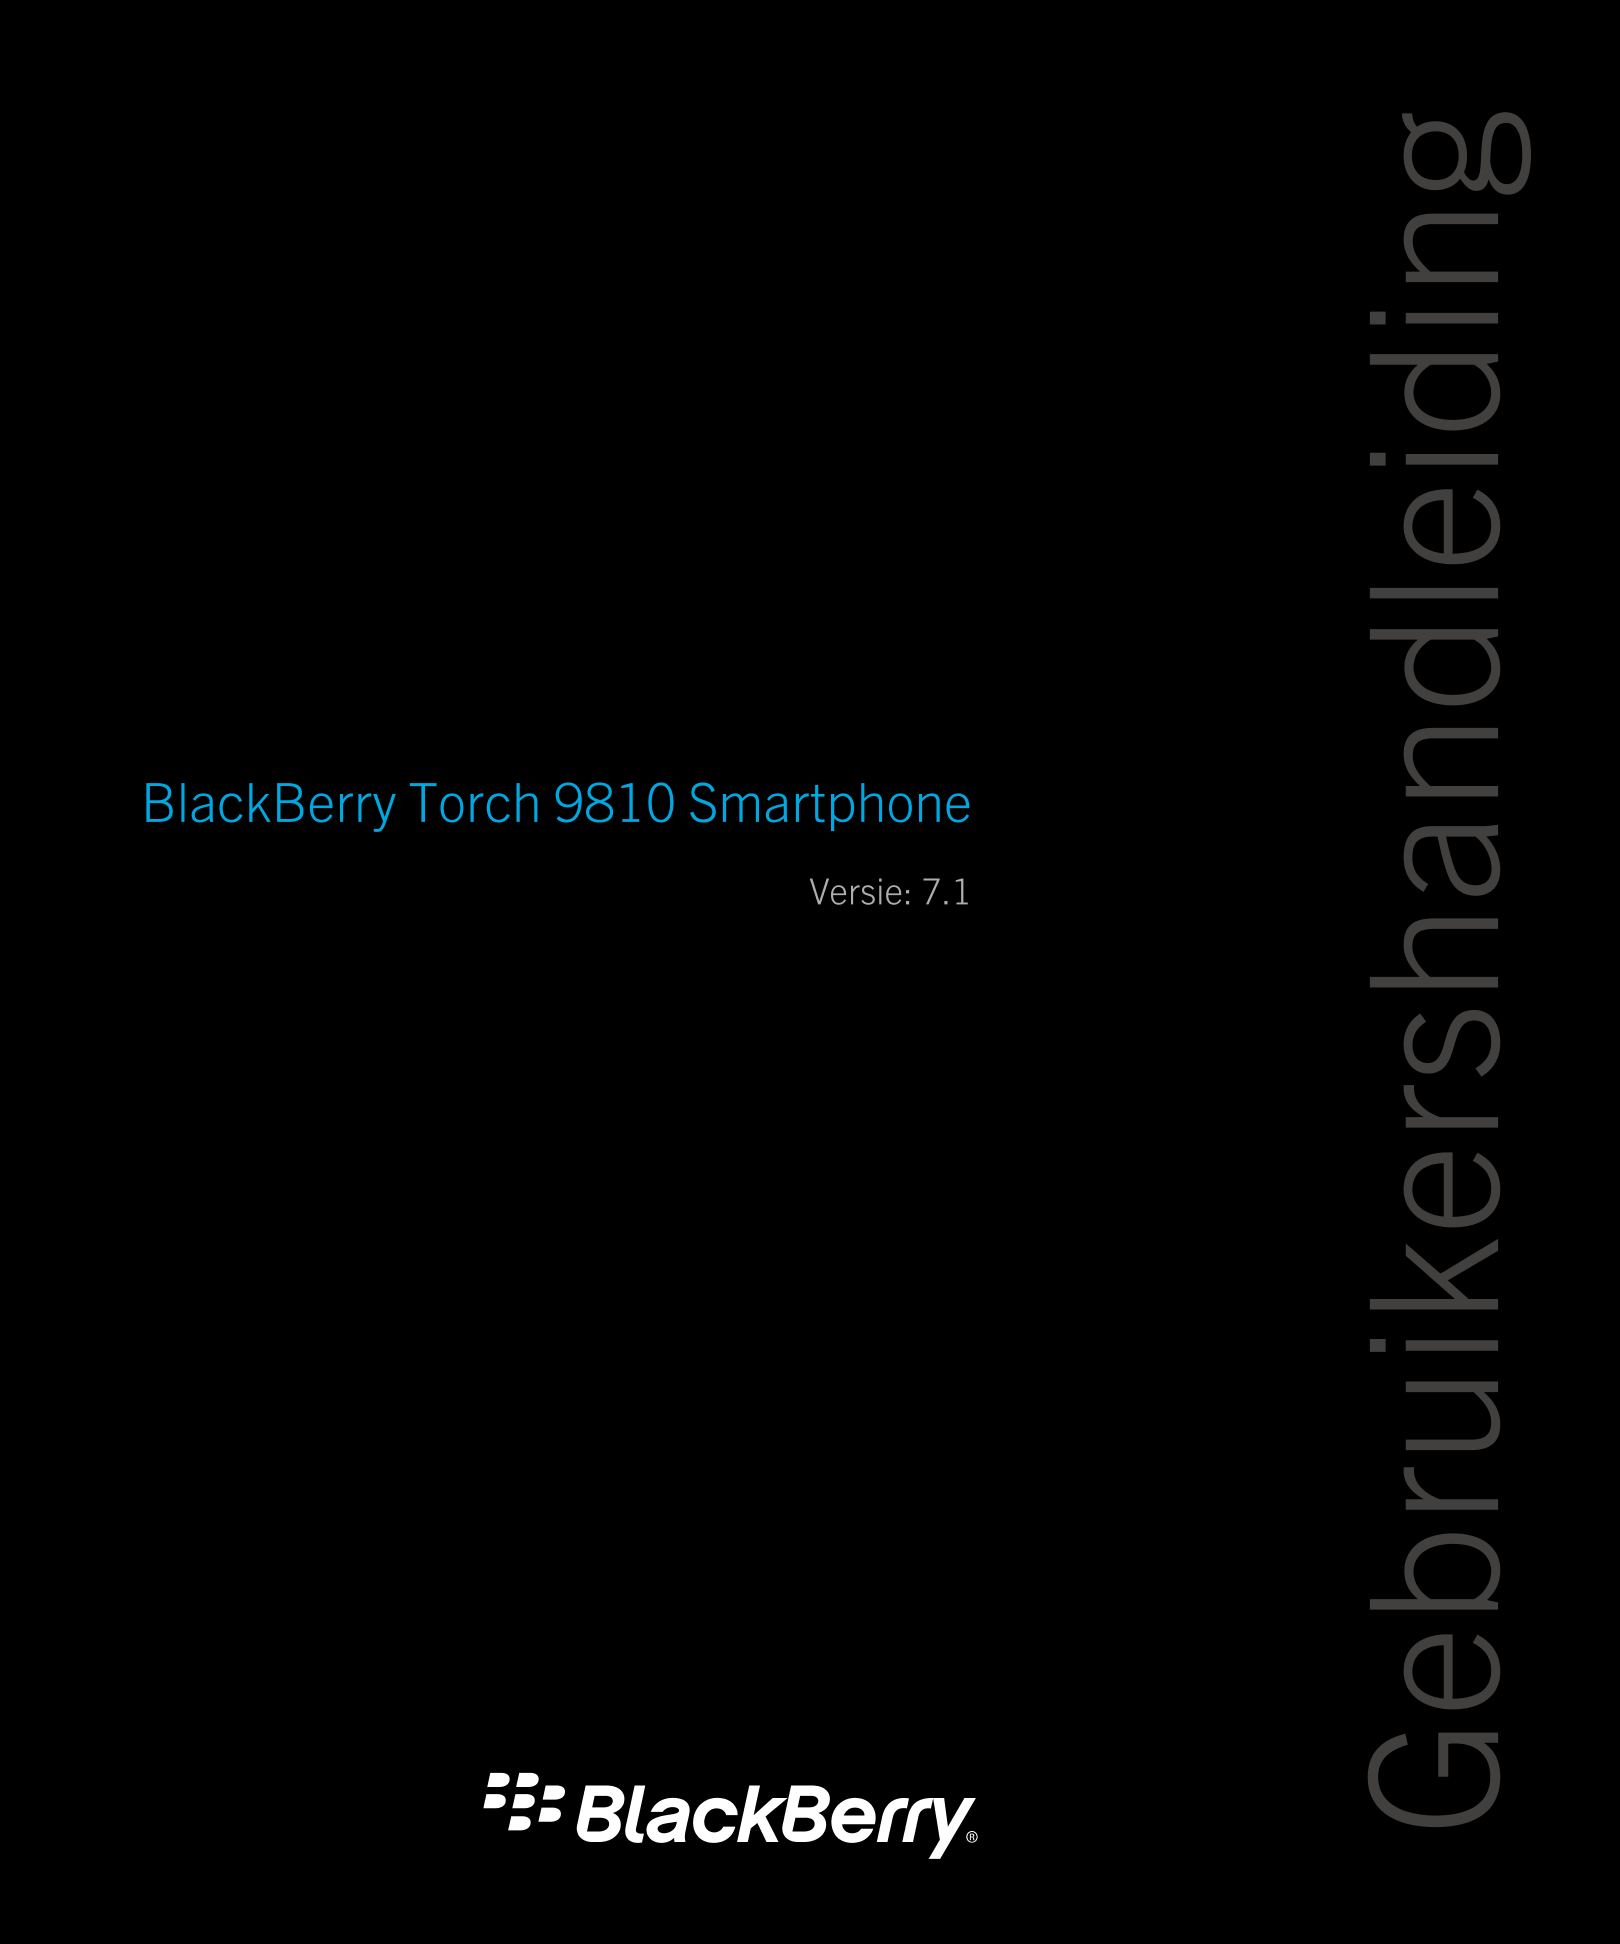 Gebruikershandleiding
BlackBerry Torch 9810 Smartphone
Versie: 7.1